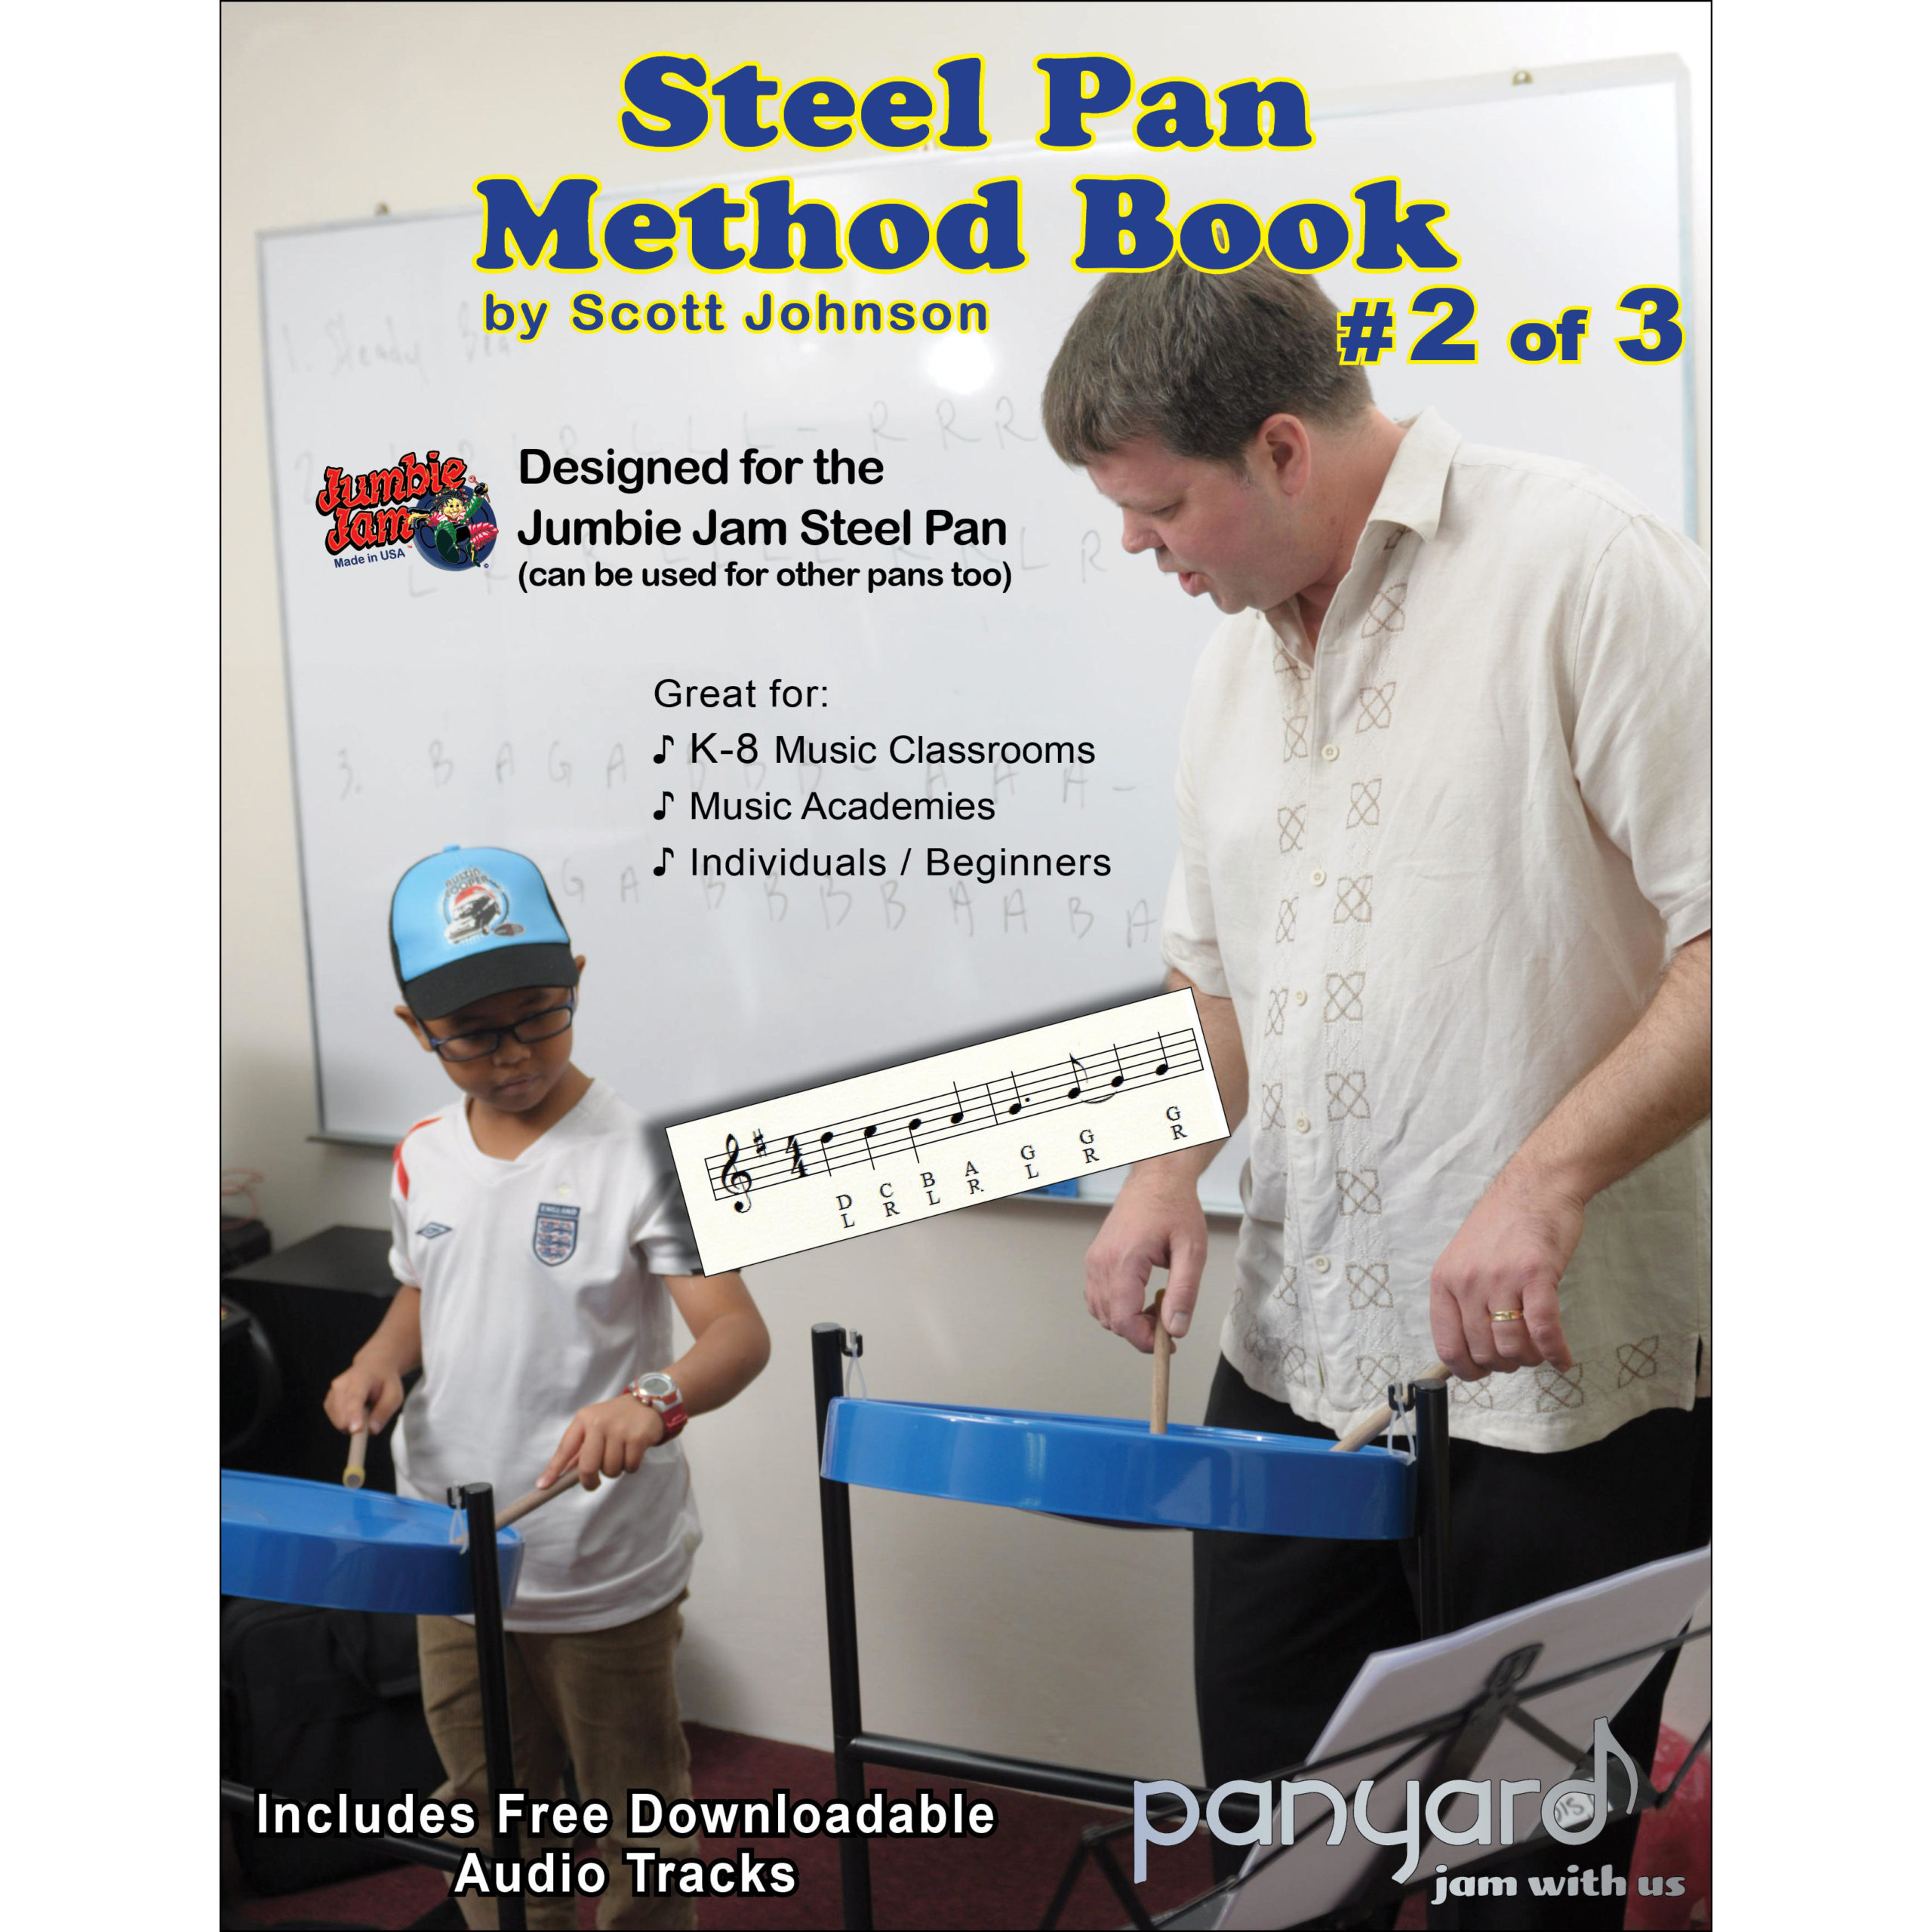 Panyard Jumbie Jam Steel Pan Method Book 2 of 3